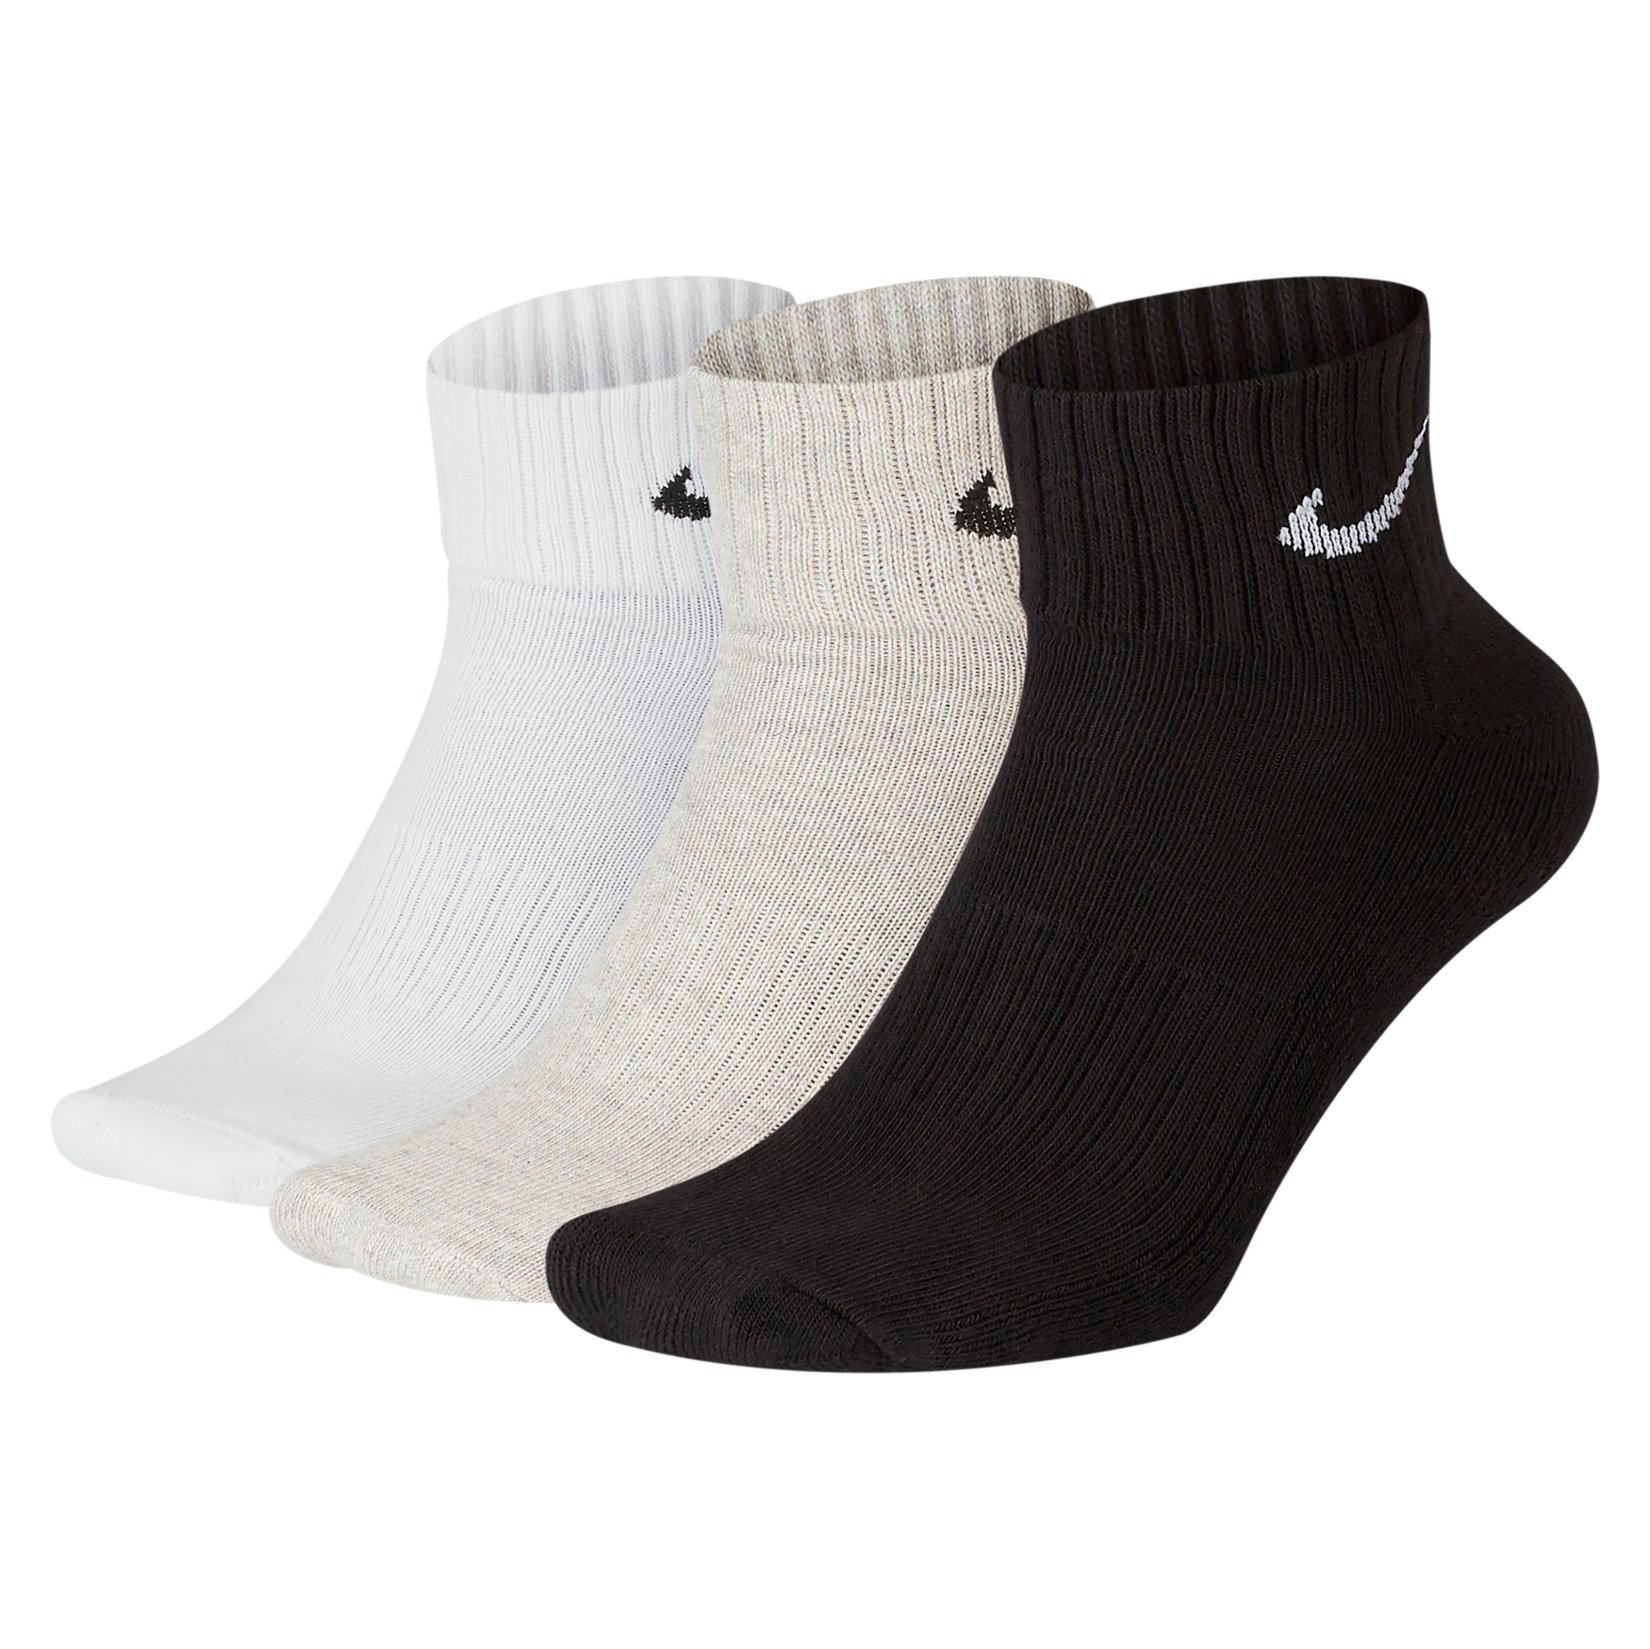 Nike Cushion Training Ankle Socks (3 Pairs) Multicolour